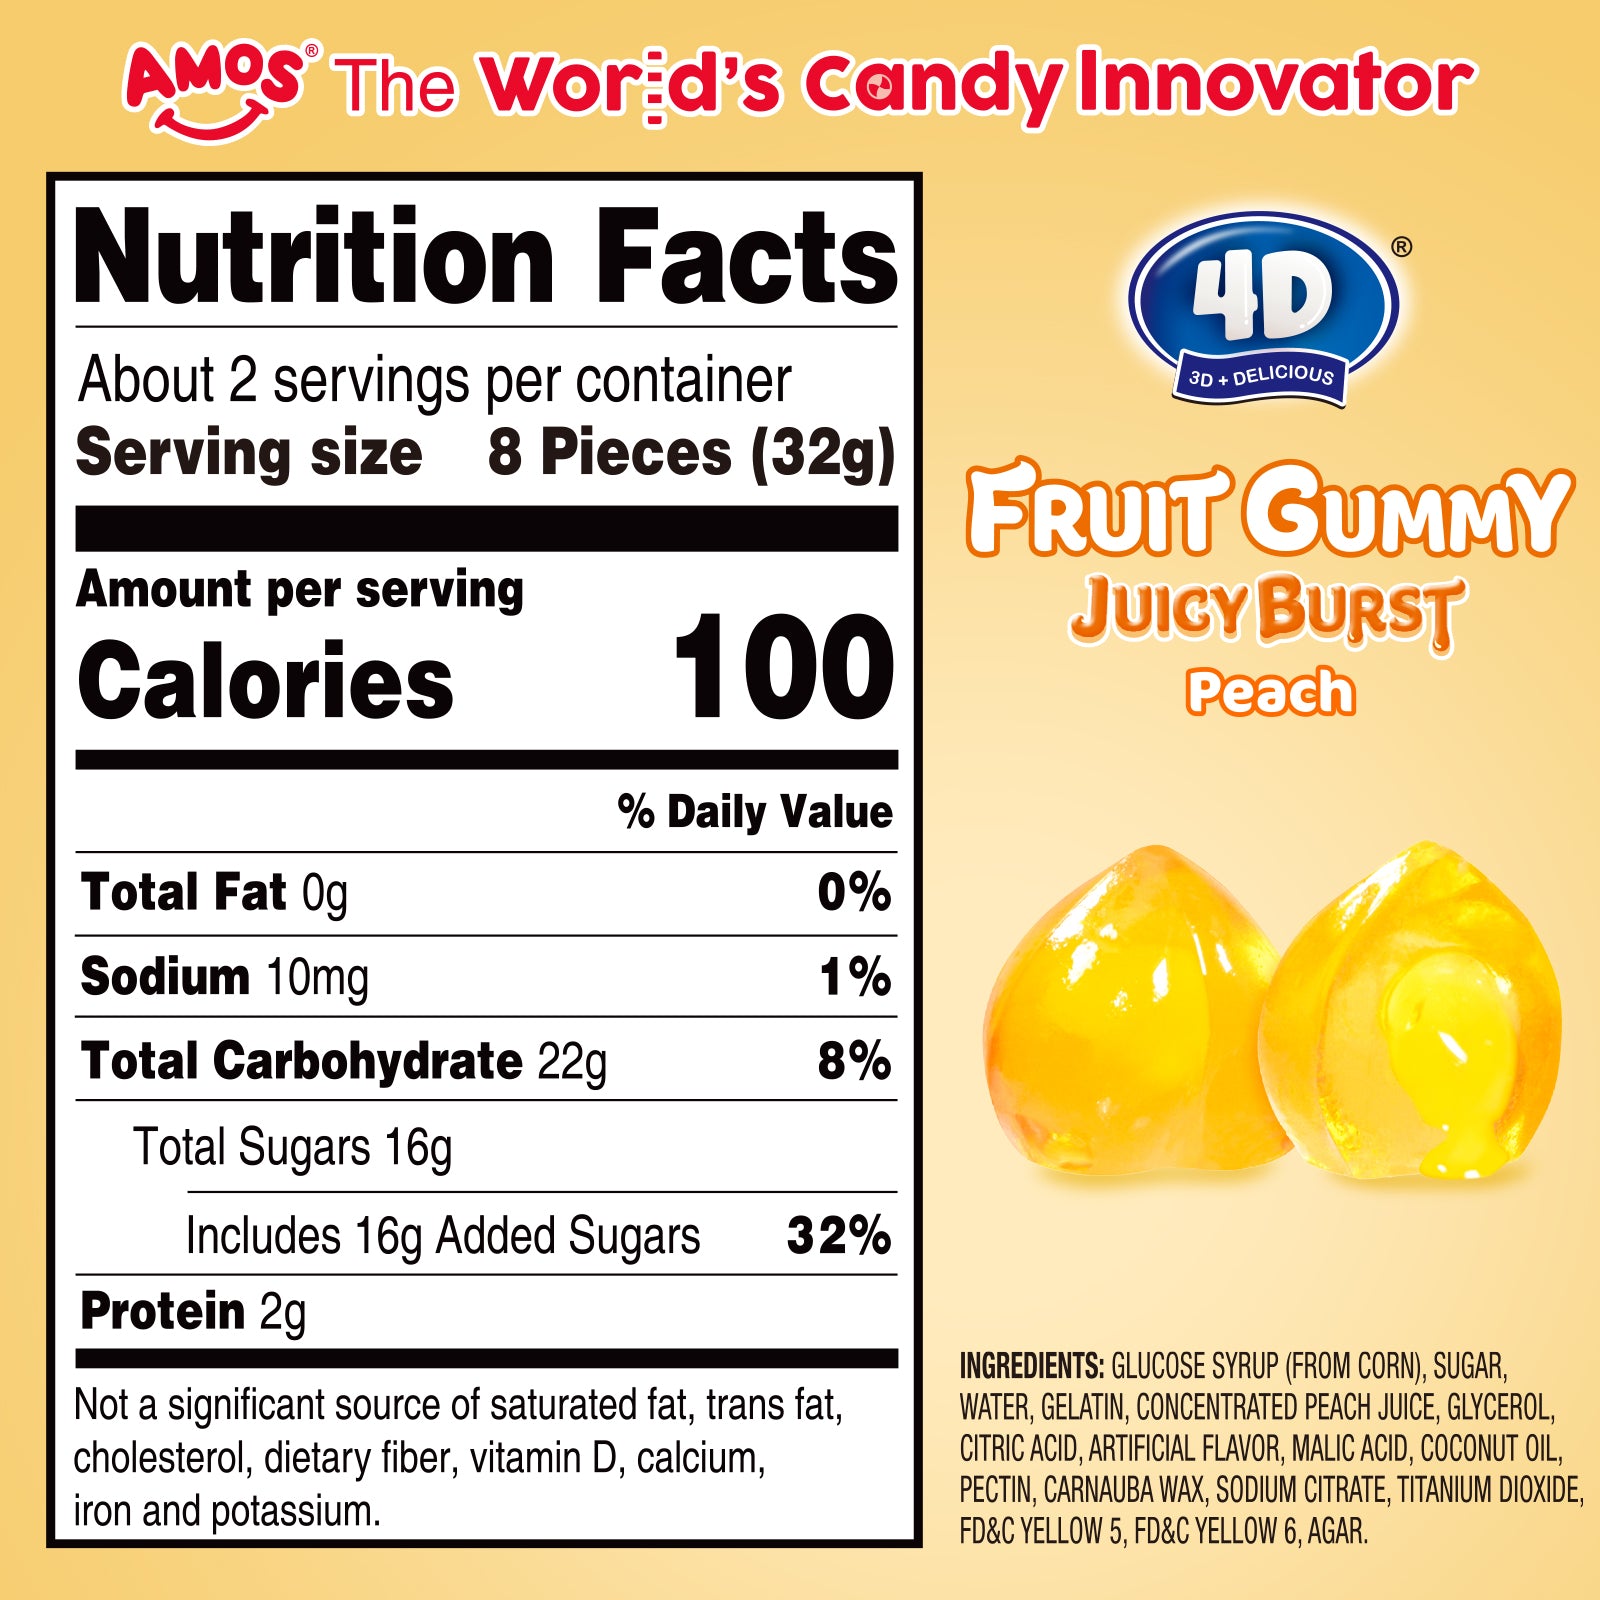 4D Fruit Gummy - Yellow Peach Burst Juice Filled